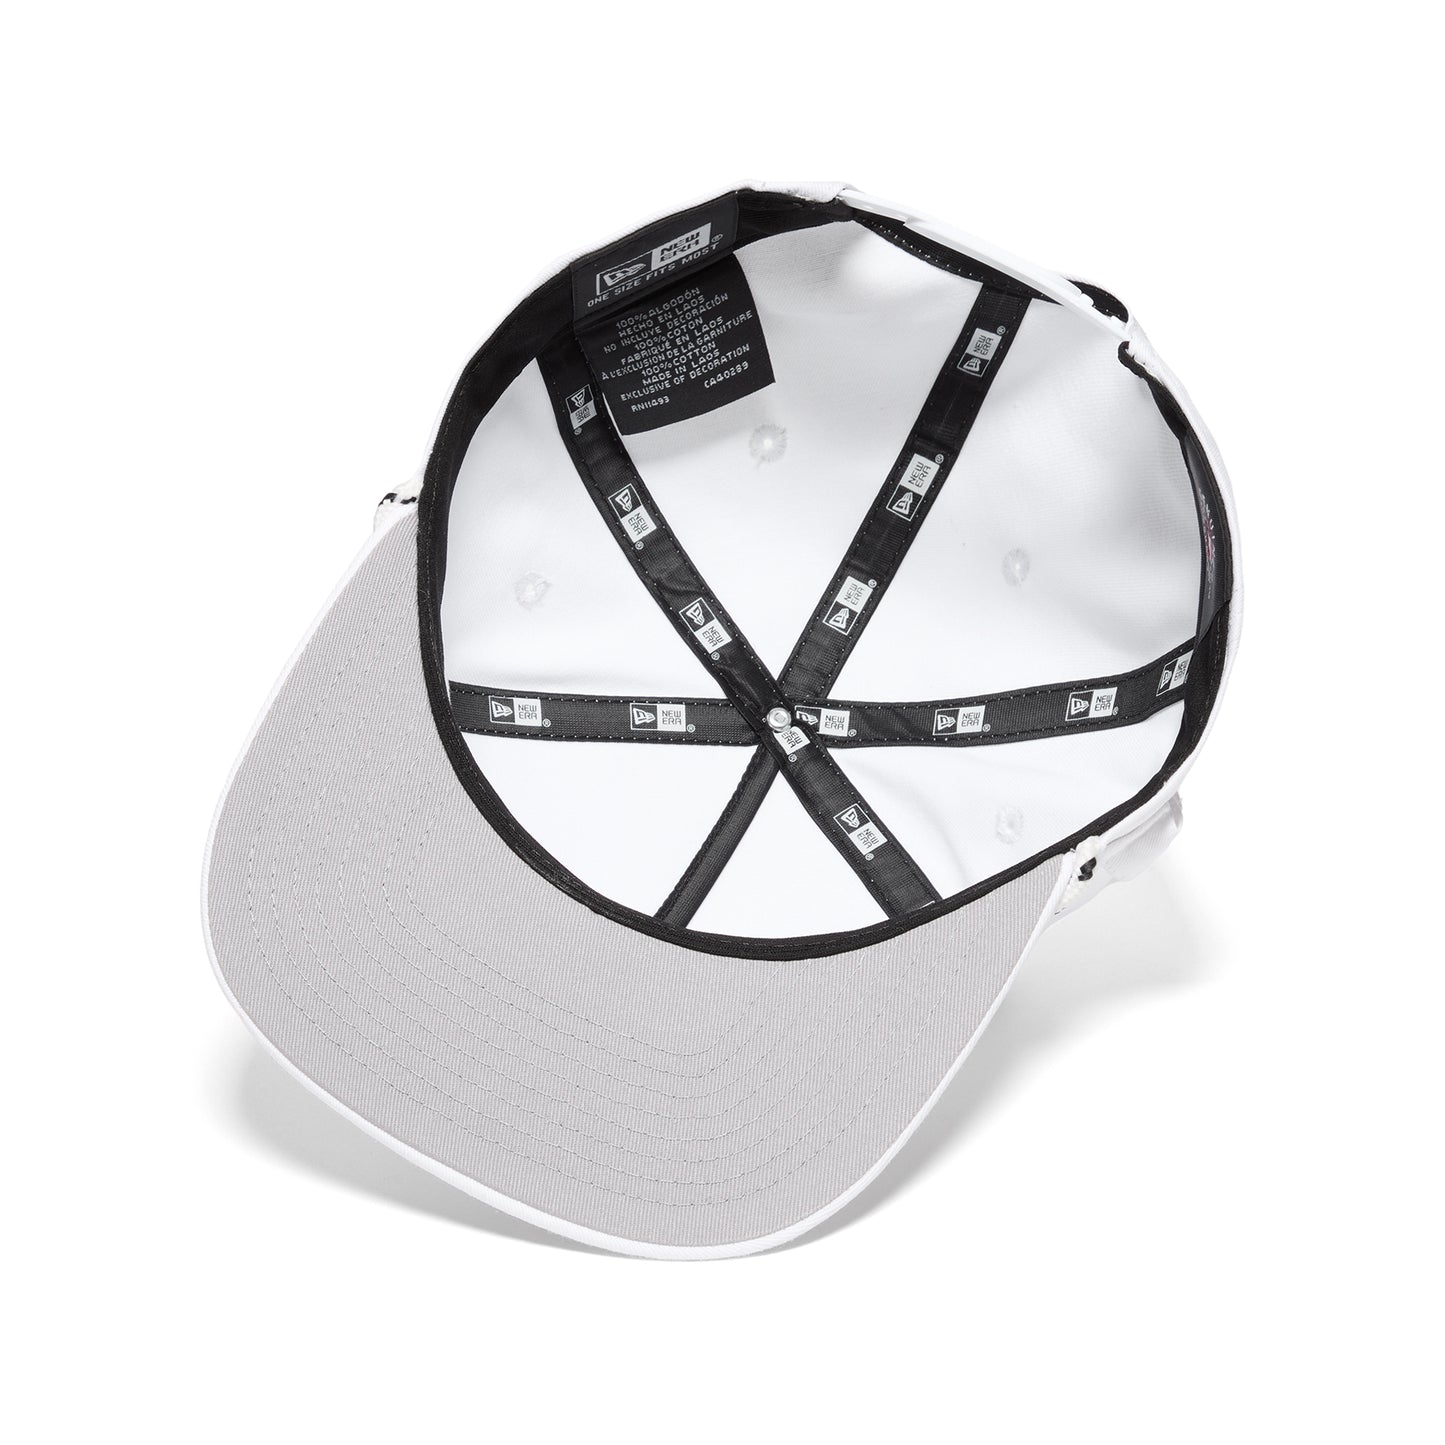 New Era Boston Red Sox Adjustable Hat (White)